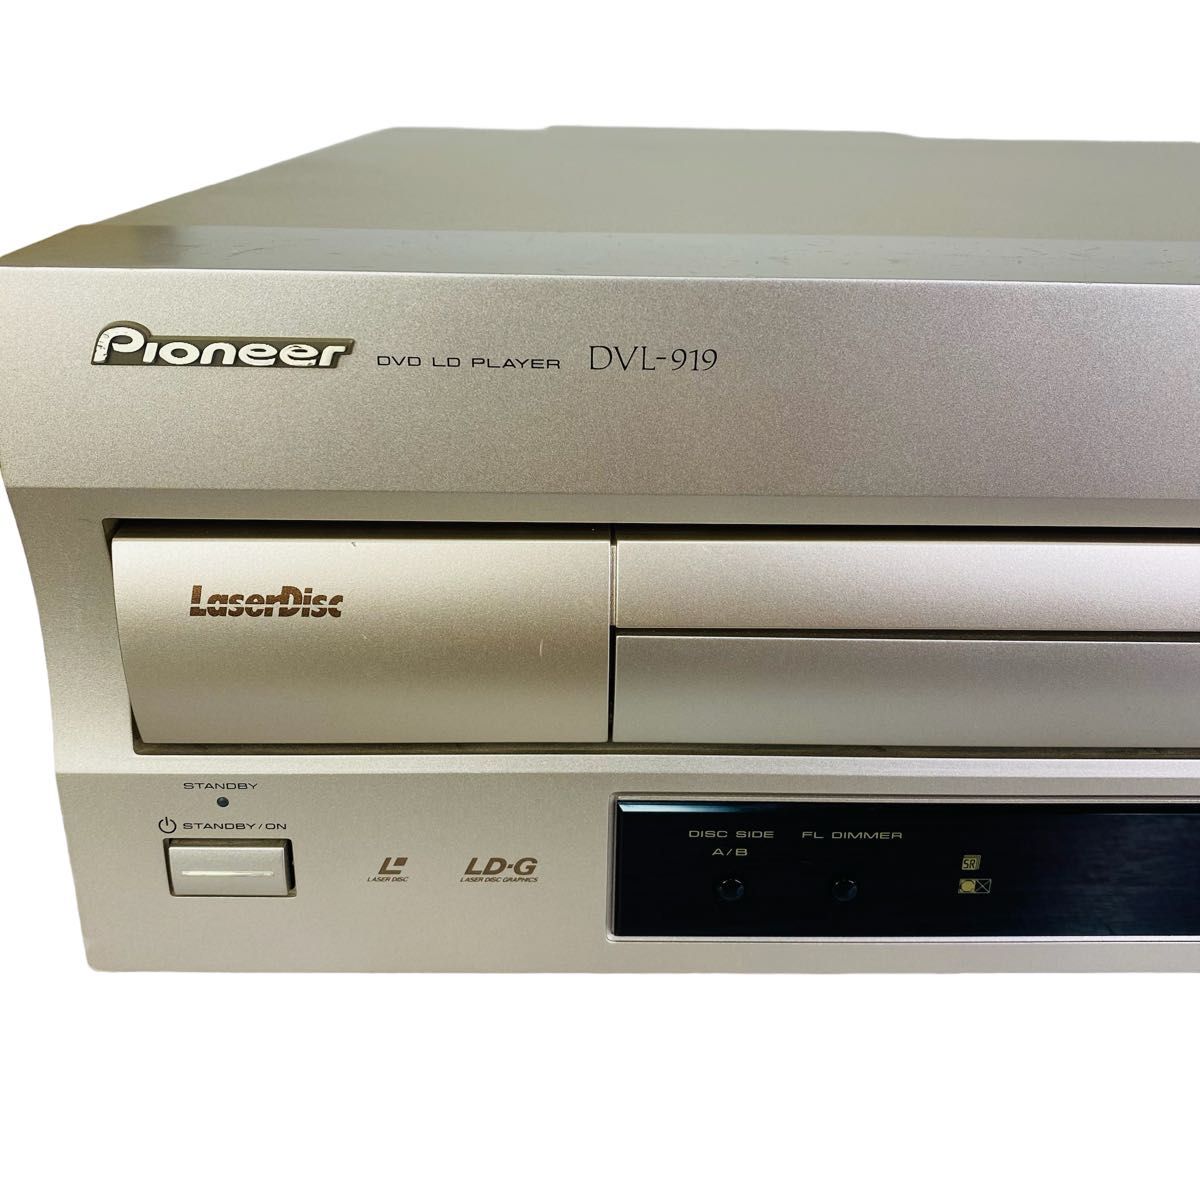 Pioneer パイオニア DVL-919 LD DVD CDプレーヤー